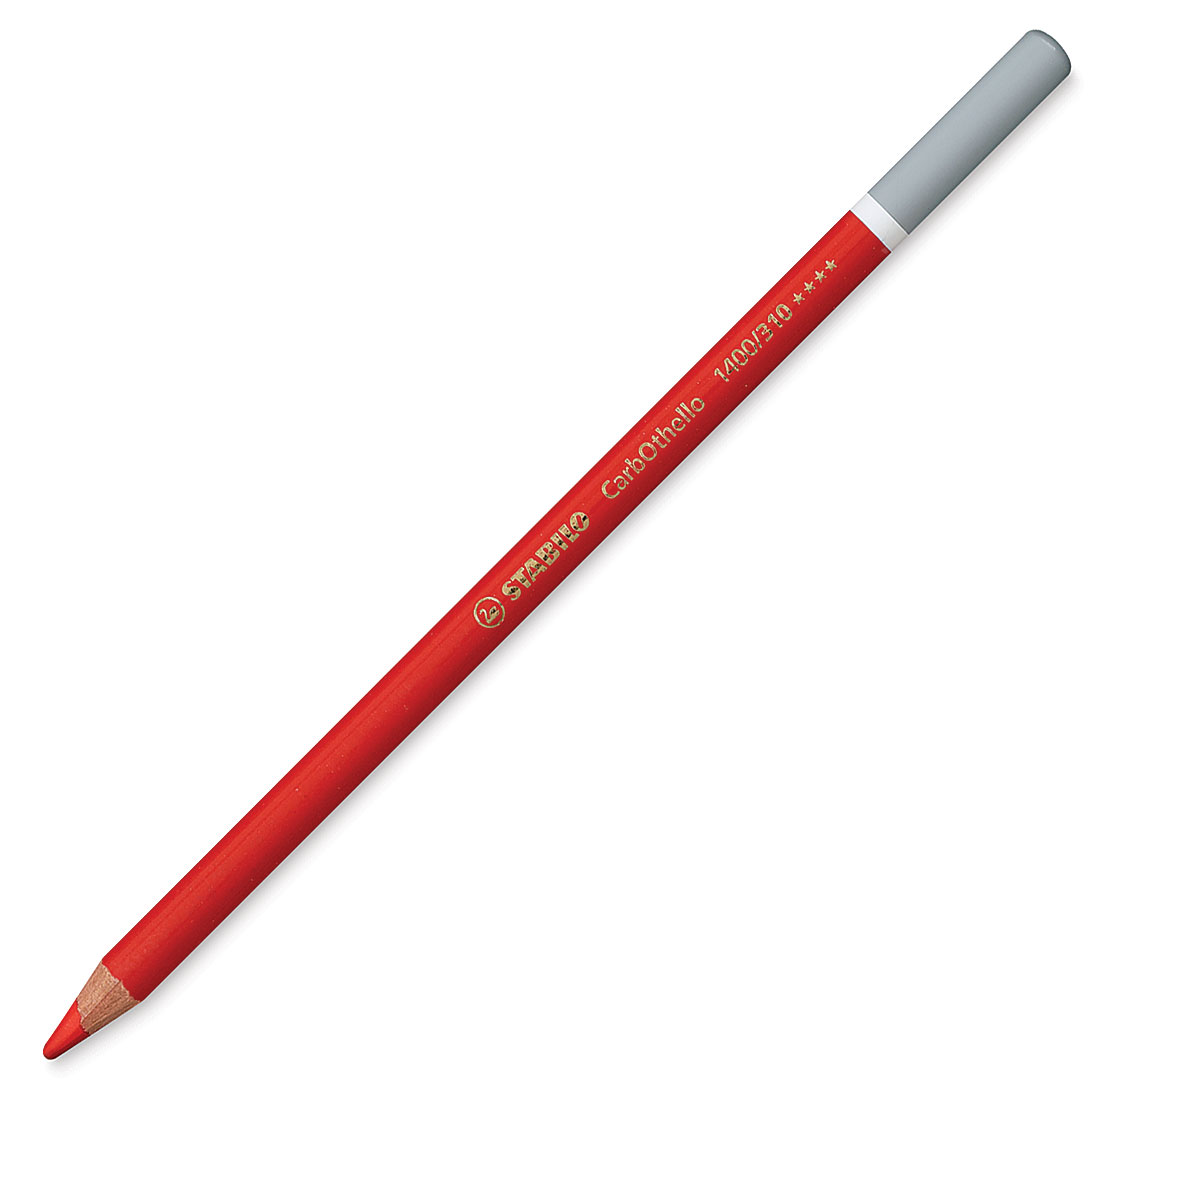 Stabilo : CarbOthello : Pastel Pencil : English Red Deep : 655